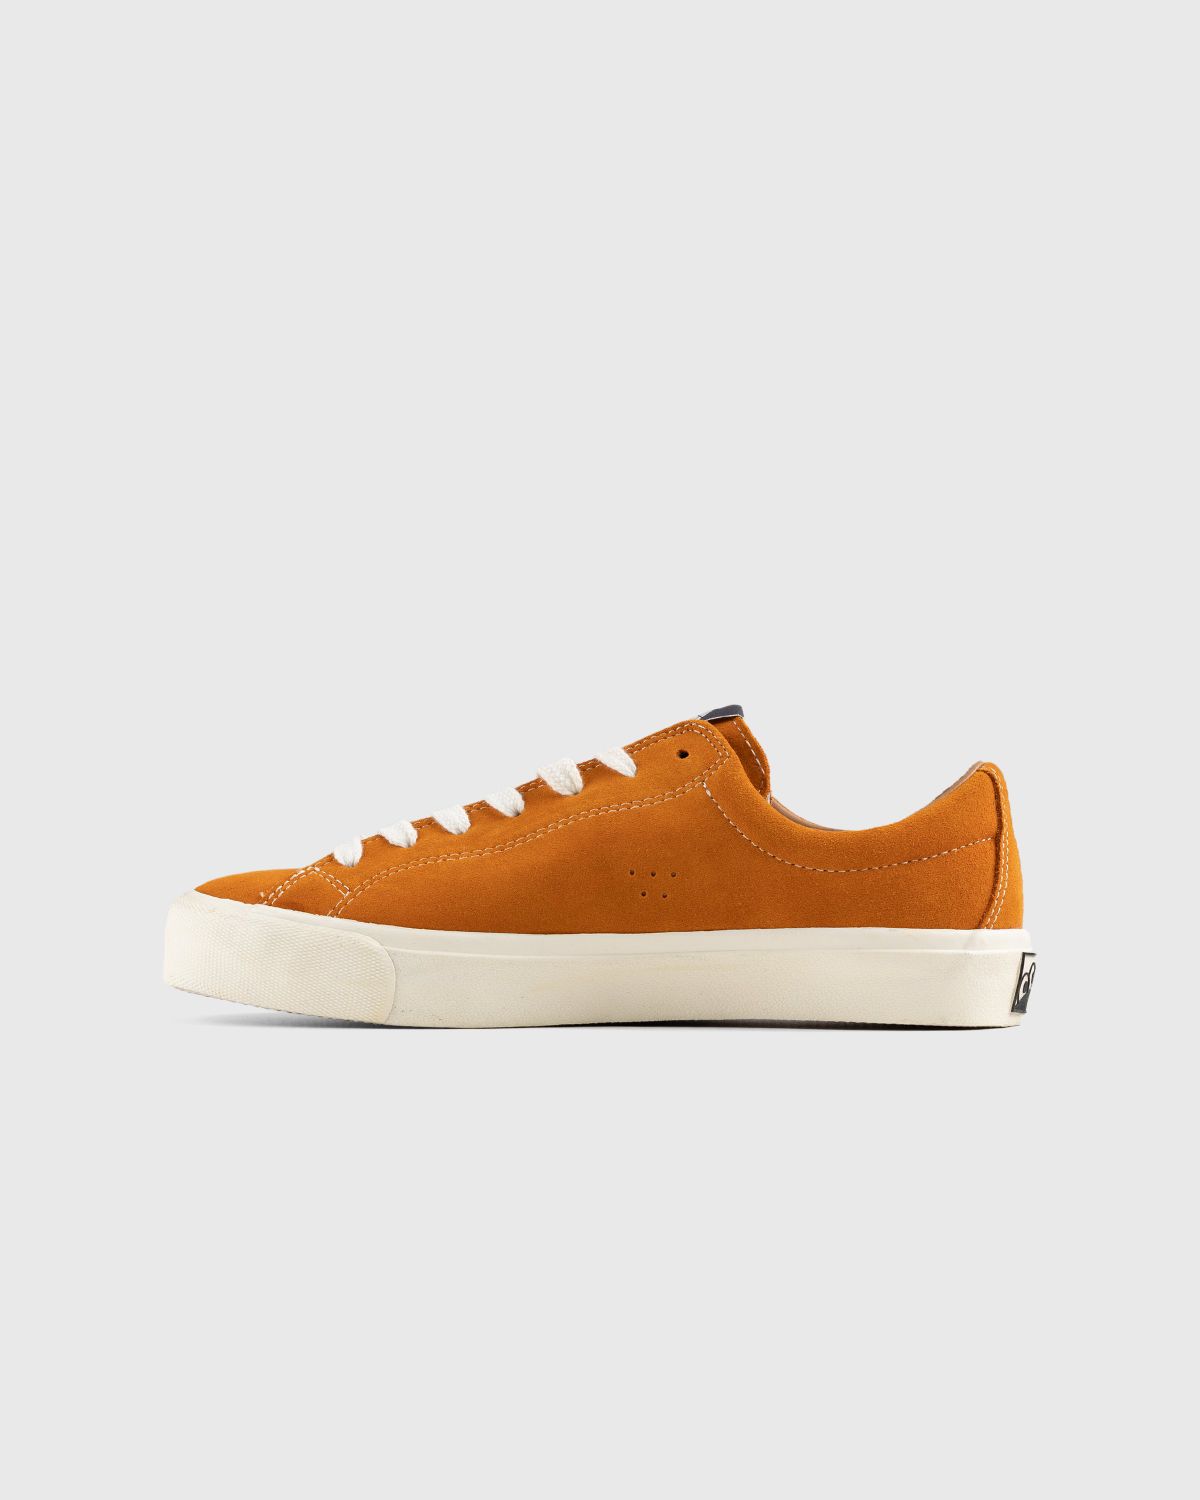 Last Resort AB – VM003 Suede Lo Cheddar/White - Low Top Sneakers - Orange - Image 2